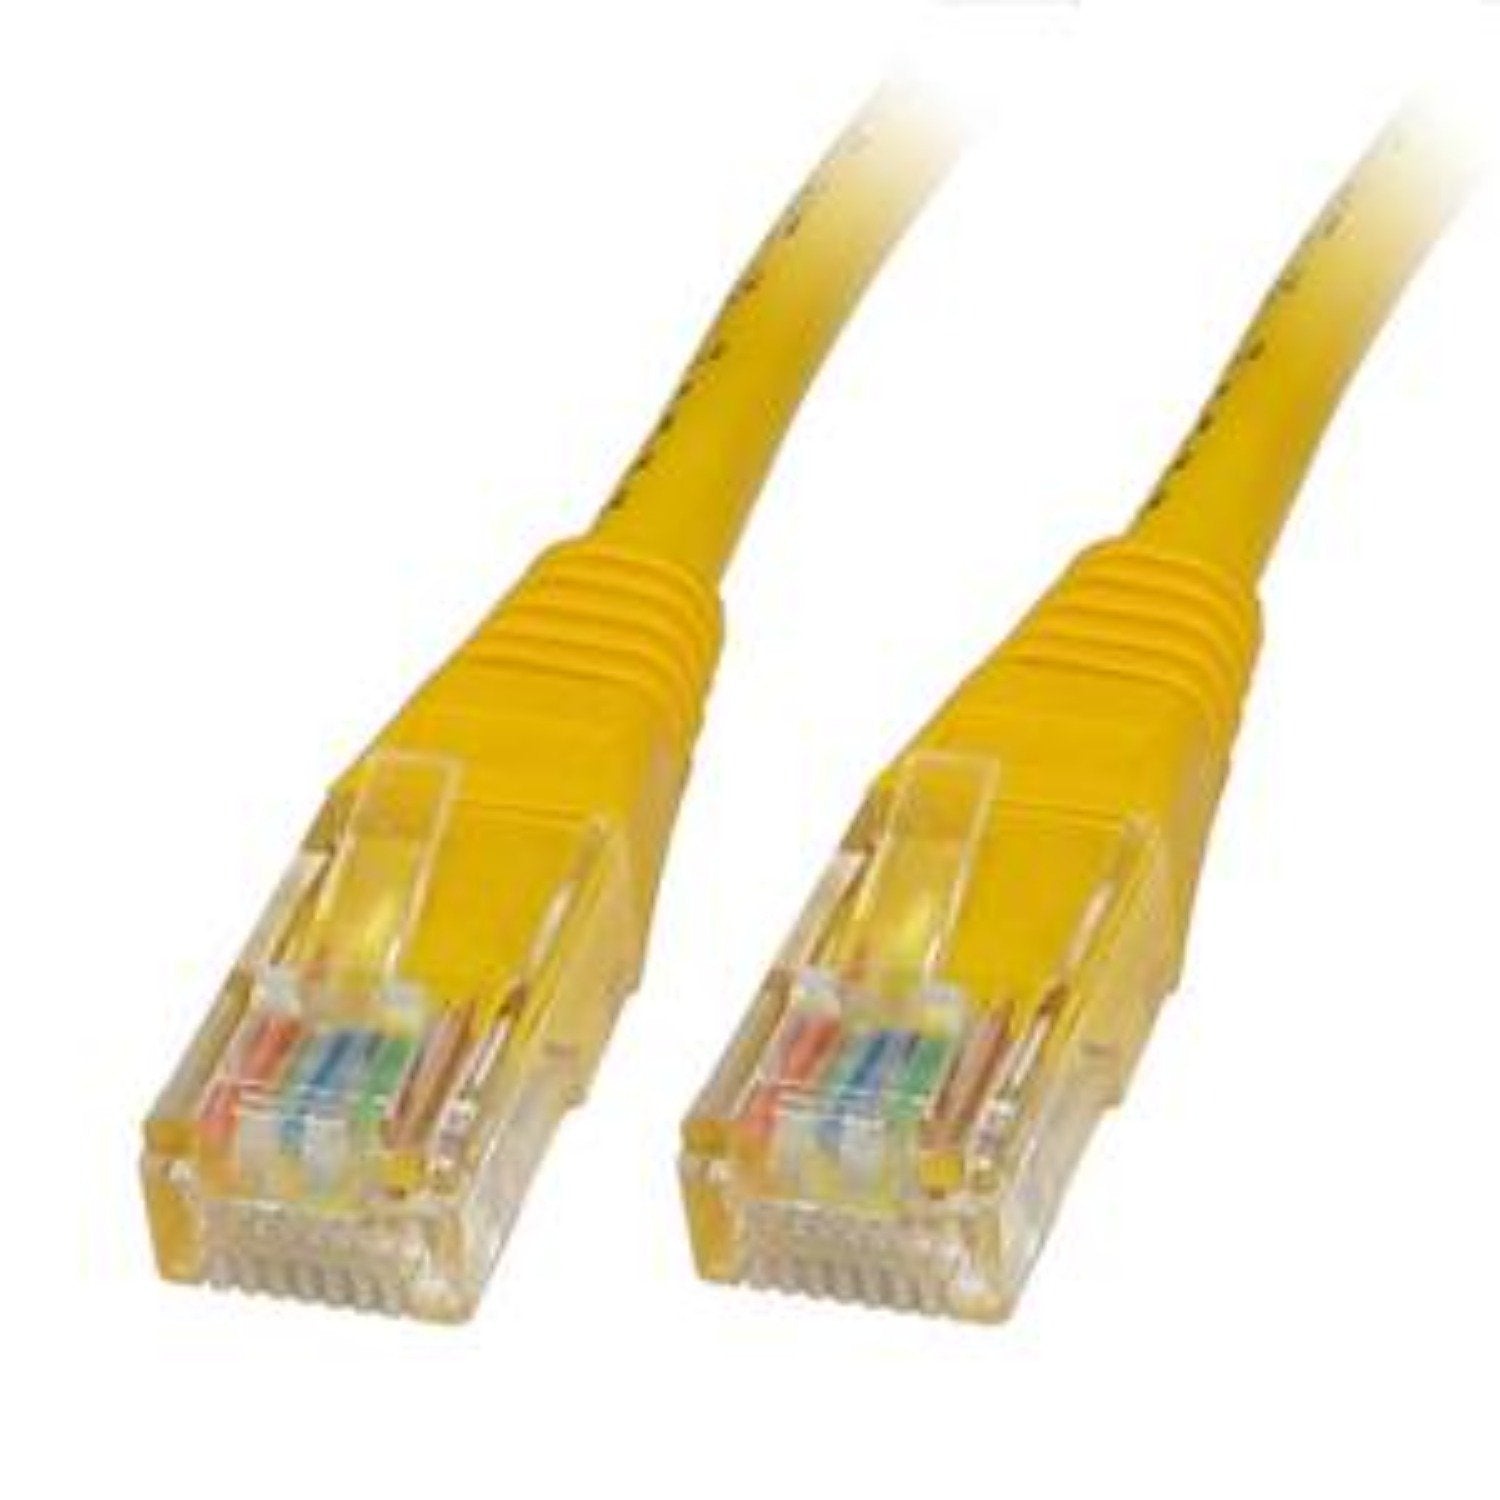 10.0m  LMS Data Ethernet Cat6 RJ45 UTP Patch cable cord, LAN 10/100/1000Mbit/s Cable suitable - Ethernet Cable 10m Cat6